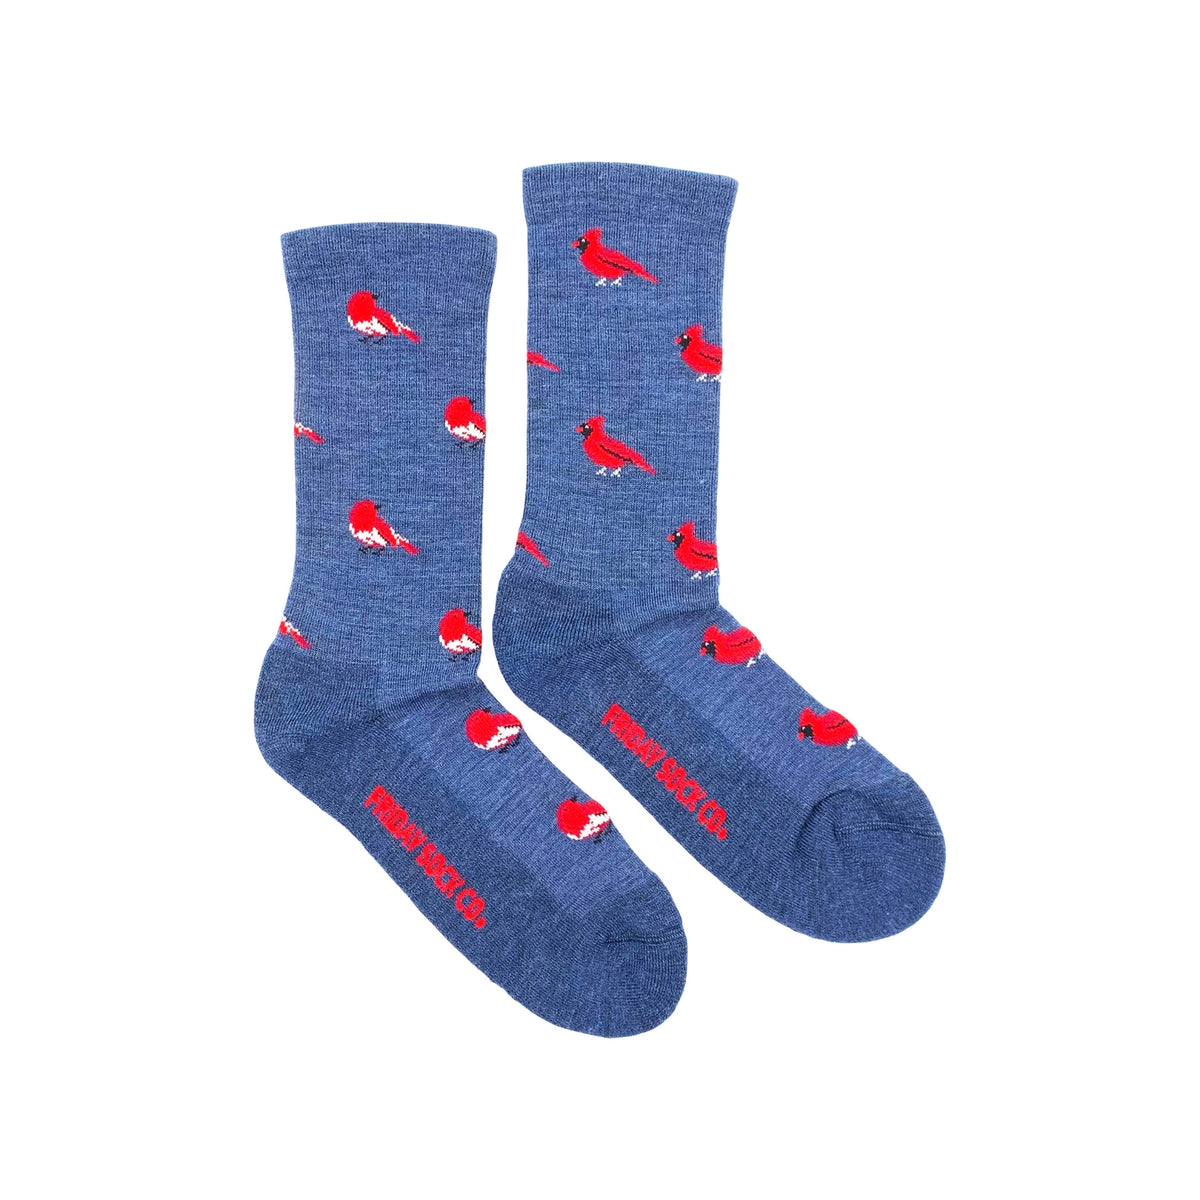 Friday Sock Co. - Women's Socks Cardinal/Robin Mismatched